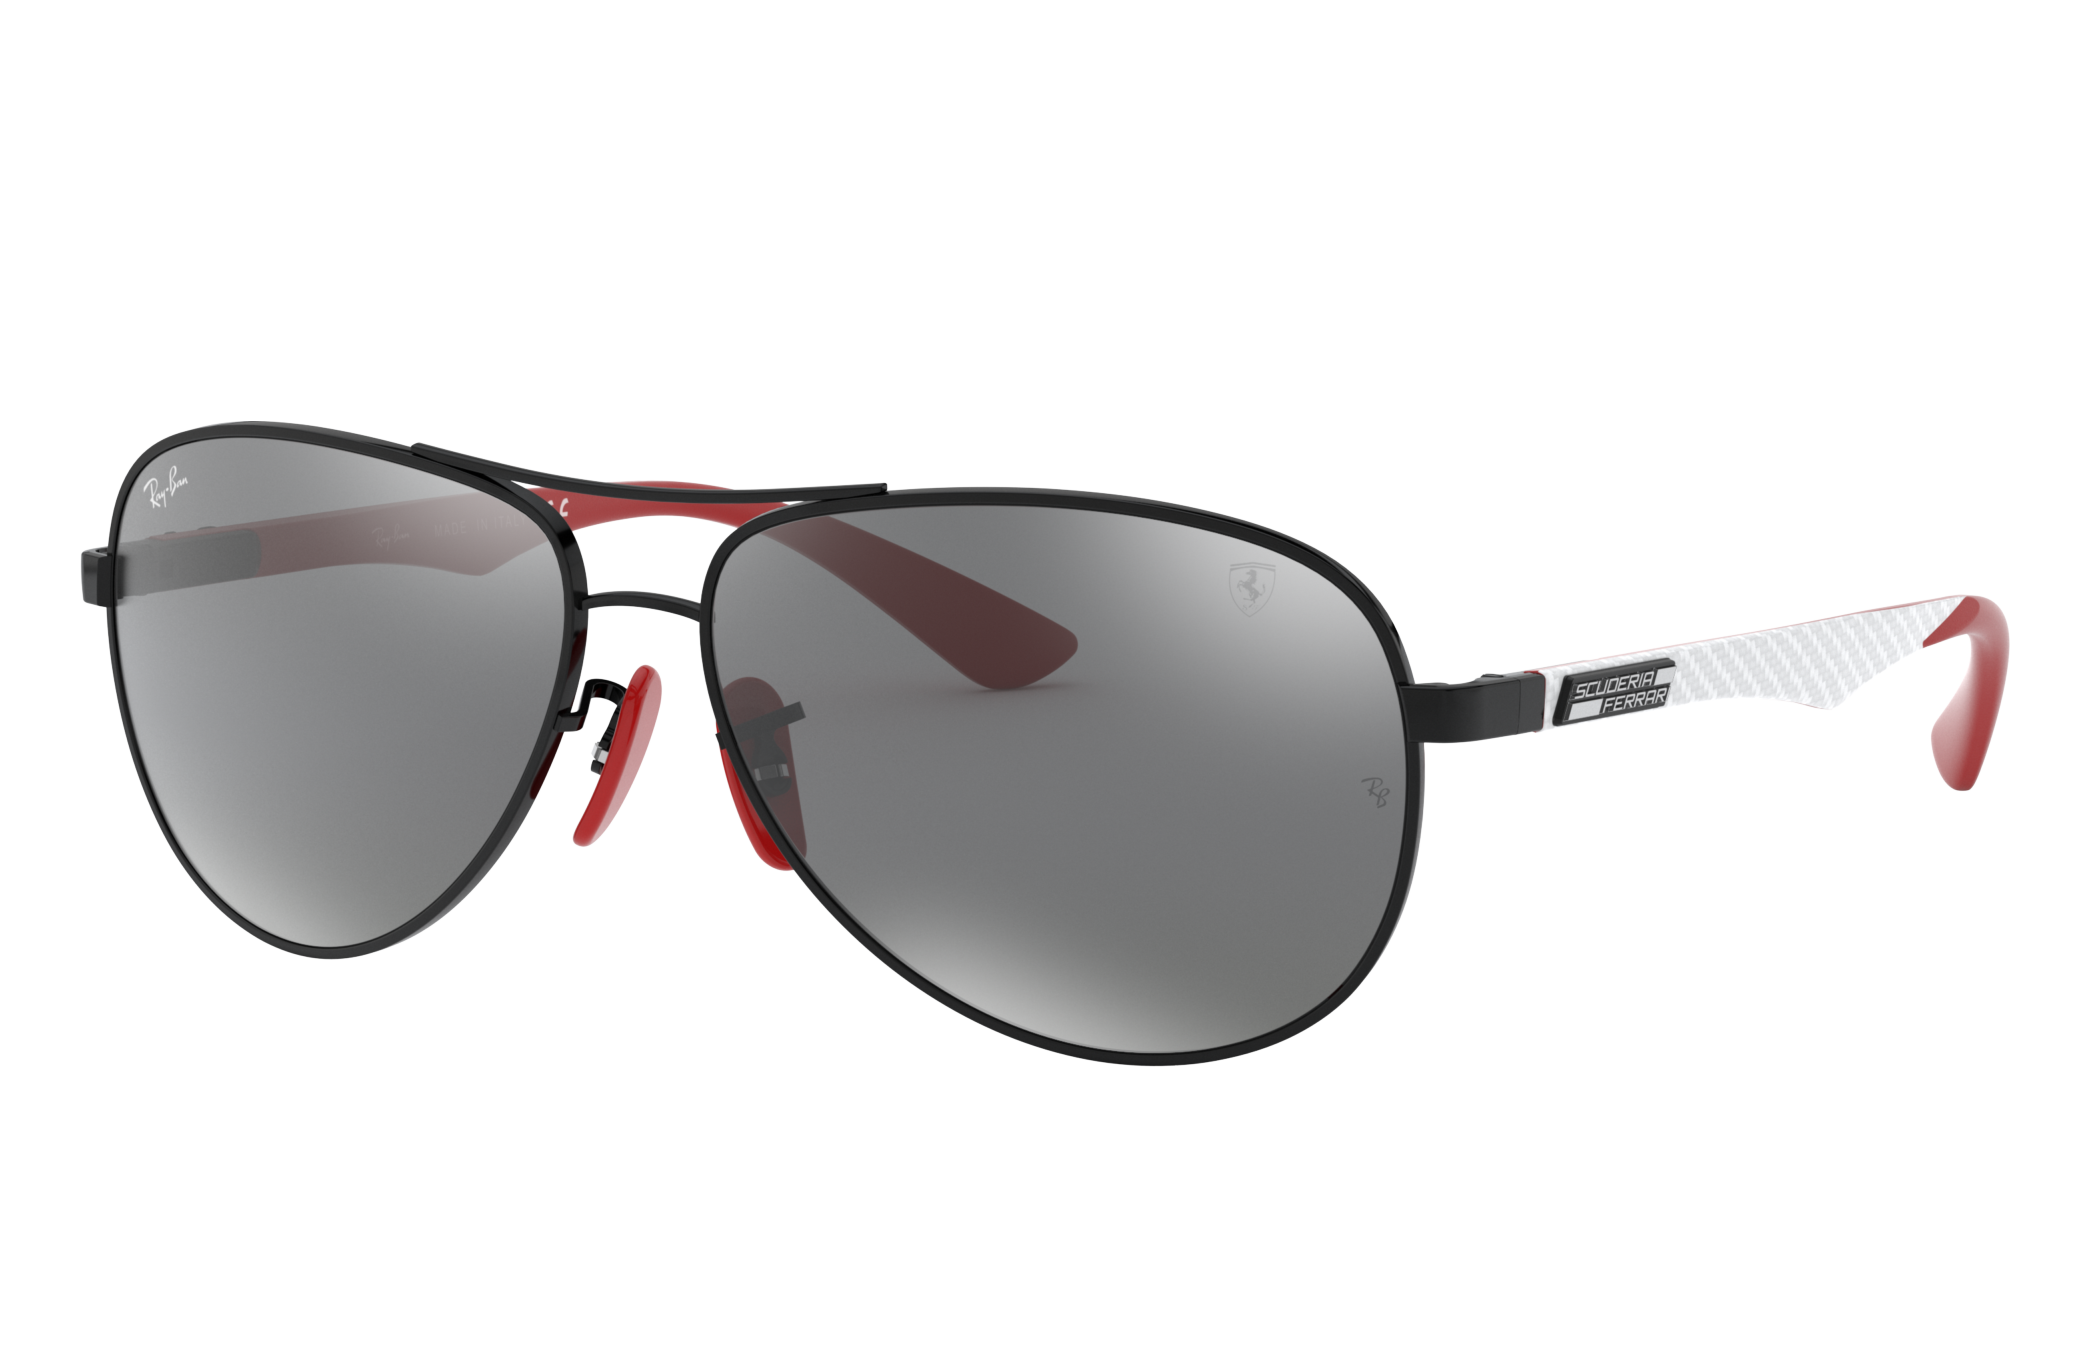 Rb8313m Scuderia Ferrari Collection Sunglasses in Black and Grey | Ray-BanÂ®